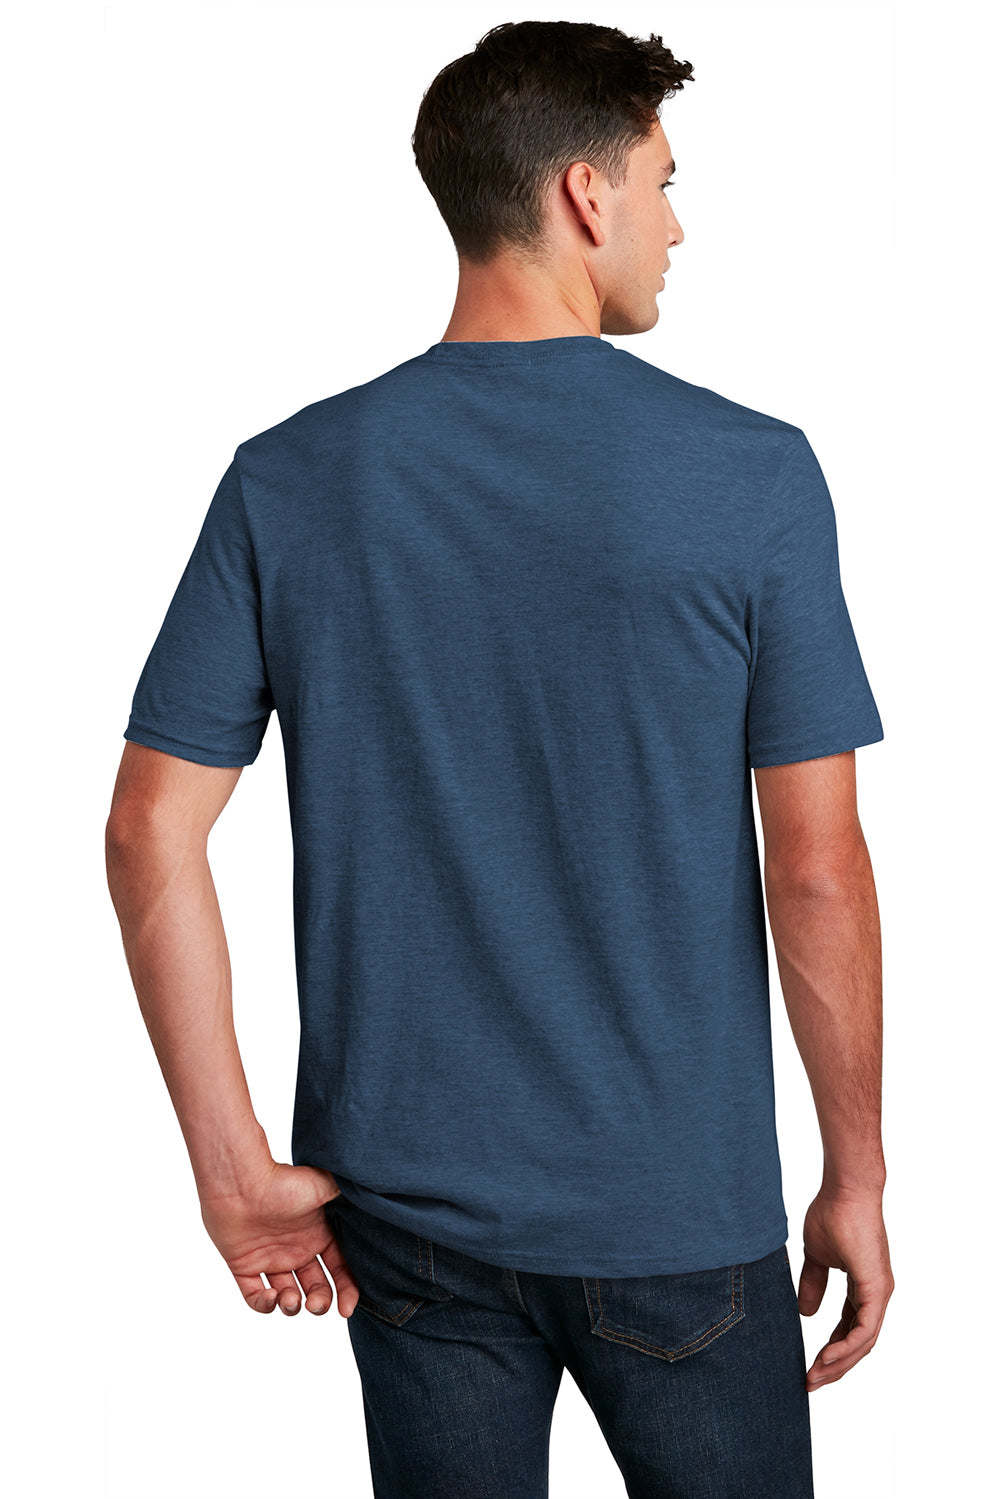 District DM108 Mens Perfect Blend Short Sleeve Crewneck T-Shirt Deep Royal Blue Fleck Back